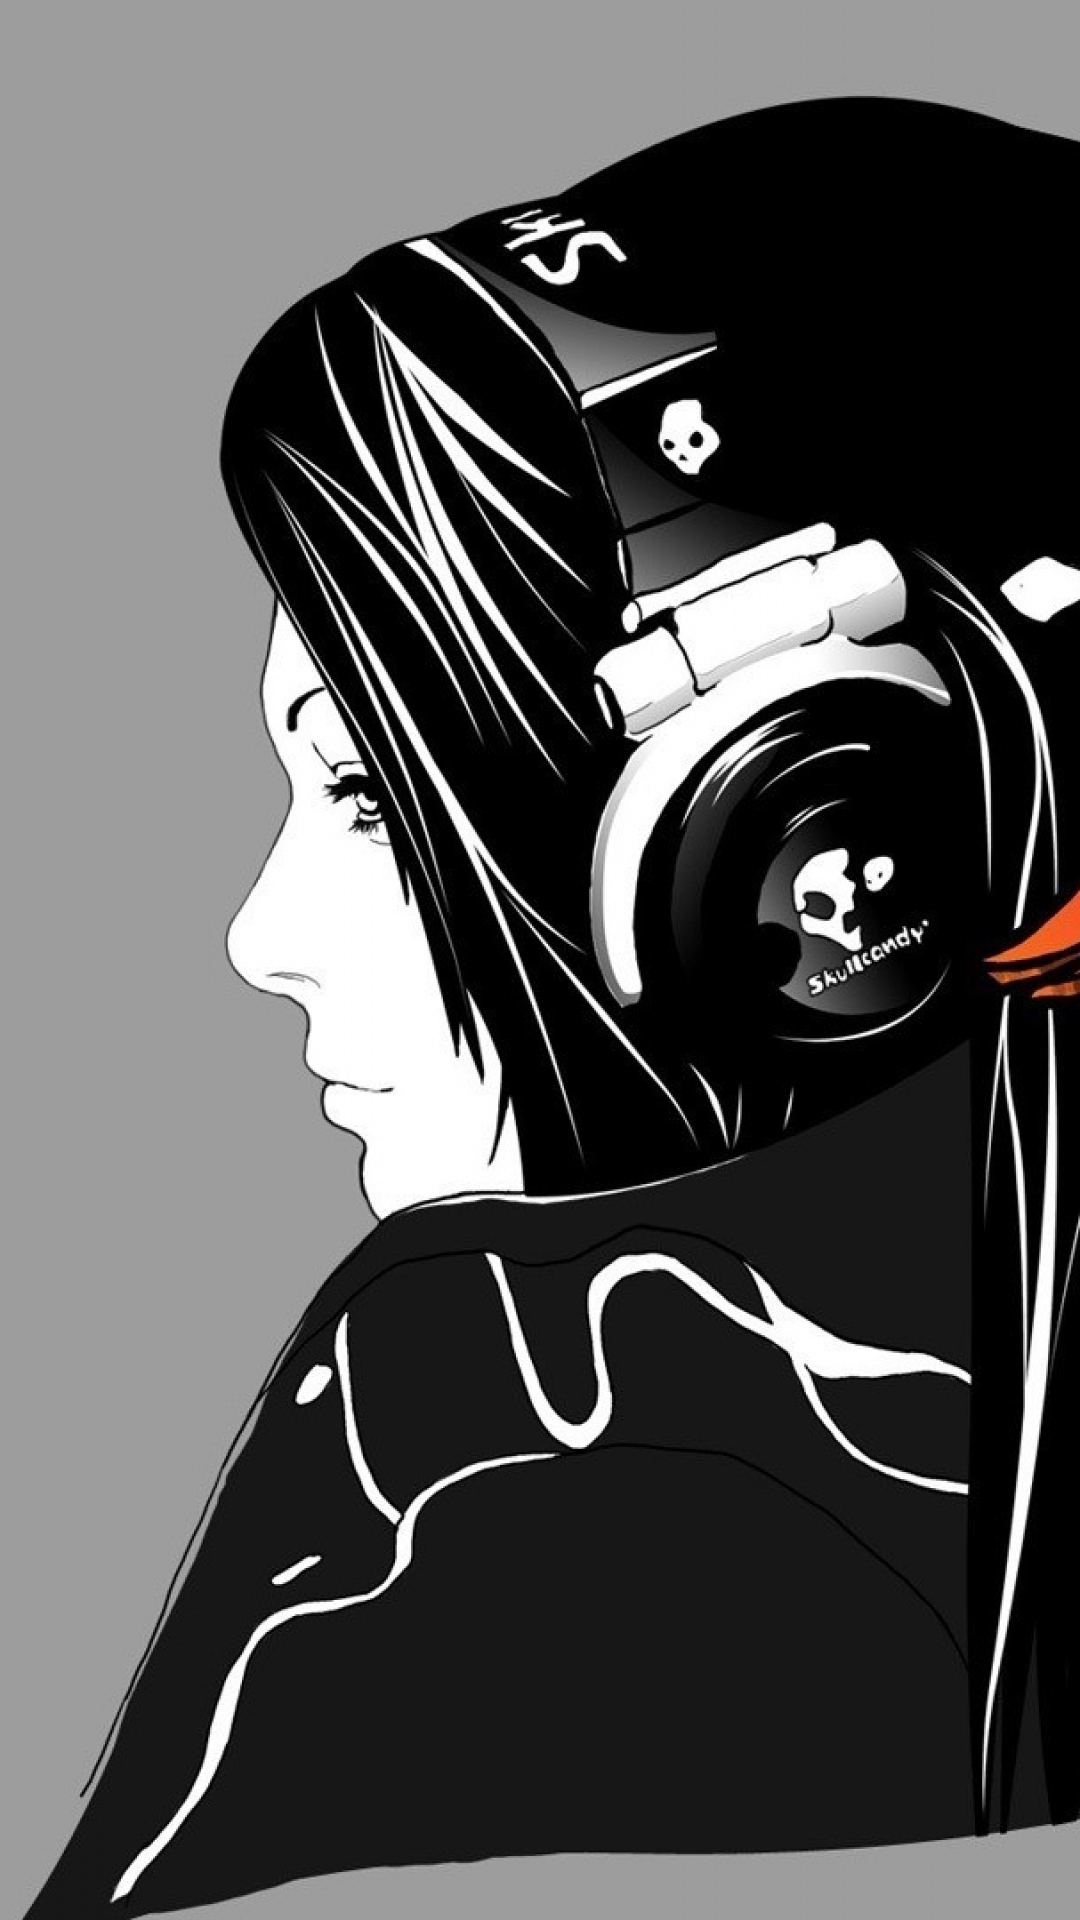 Minimal-Girl-Skull-Headphones-Music-iPhone-6-Plus-HD-Wallpaper.